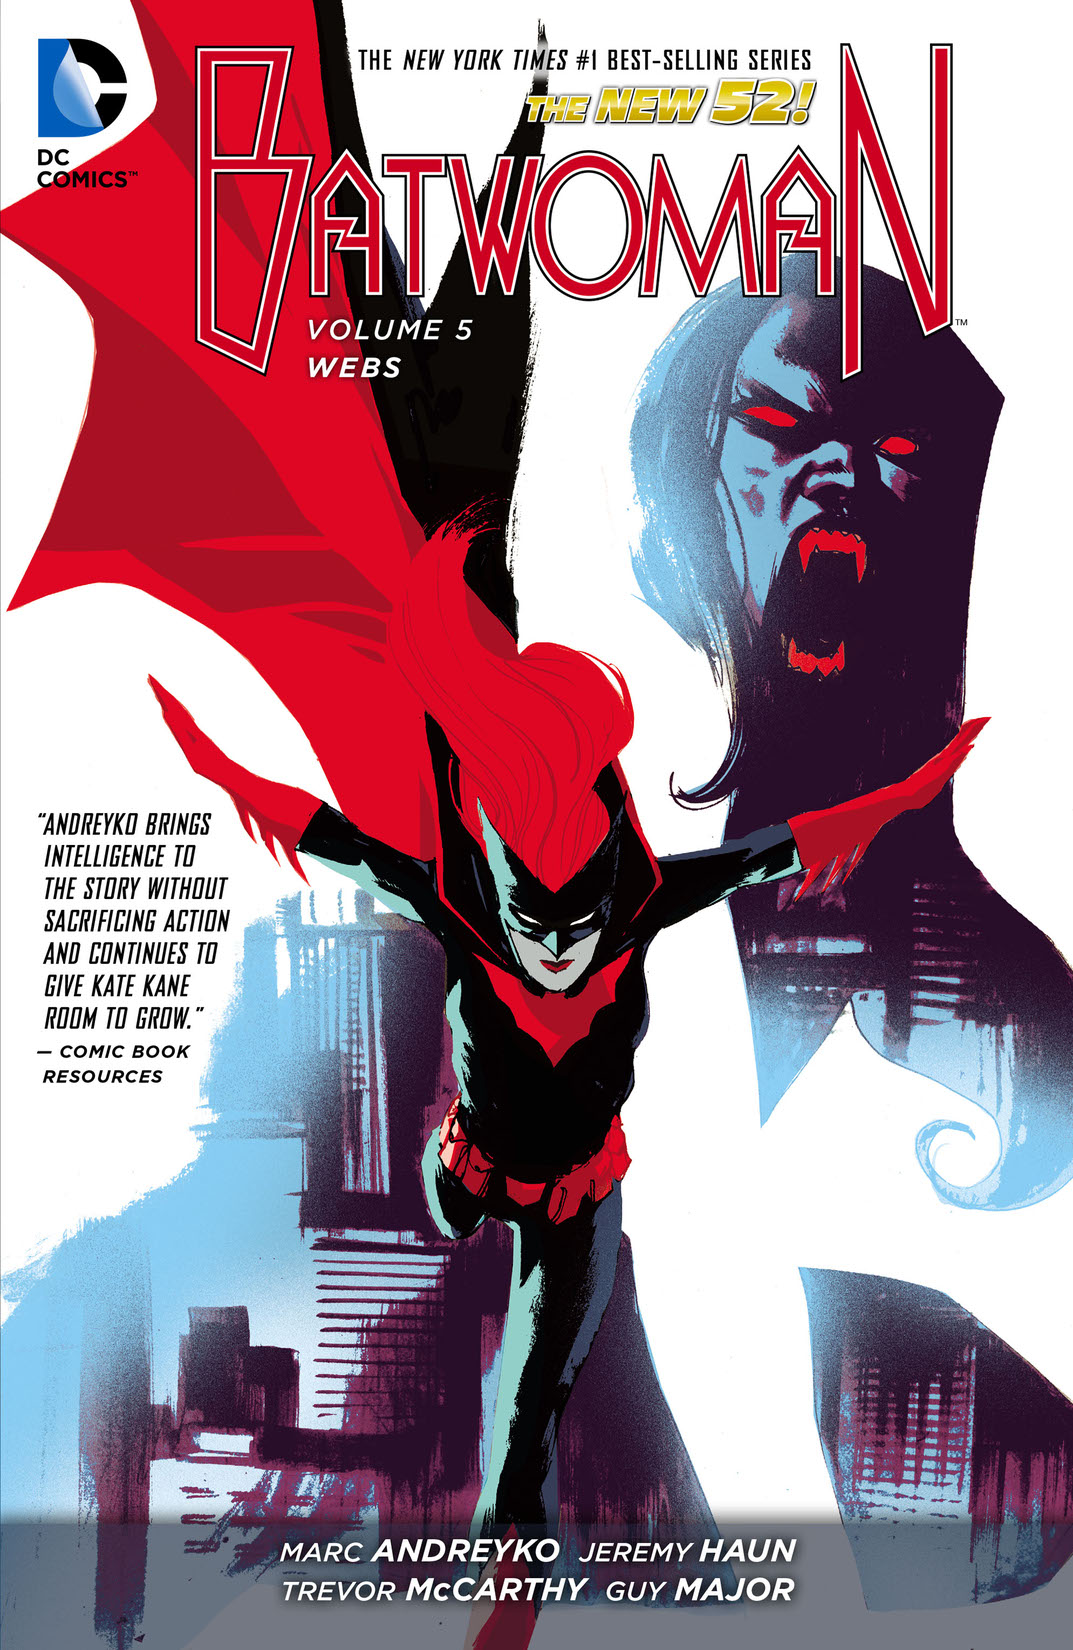 Batwoman Vol. 5: Webs preview images